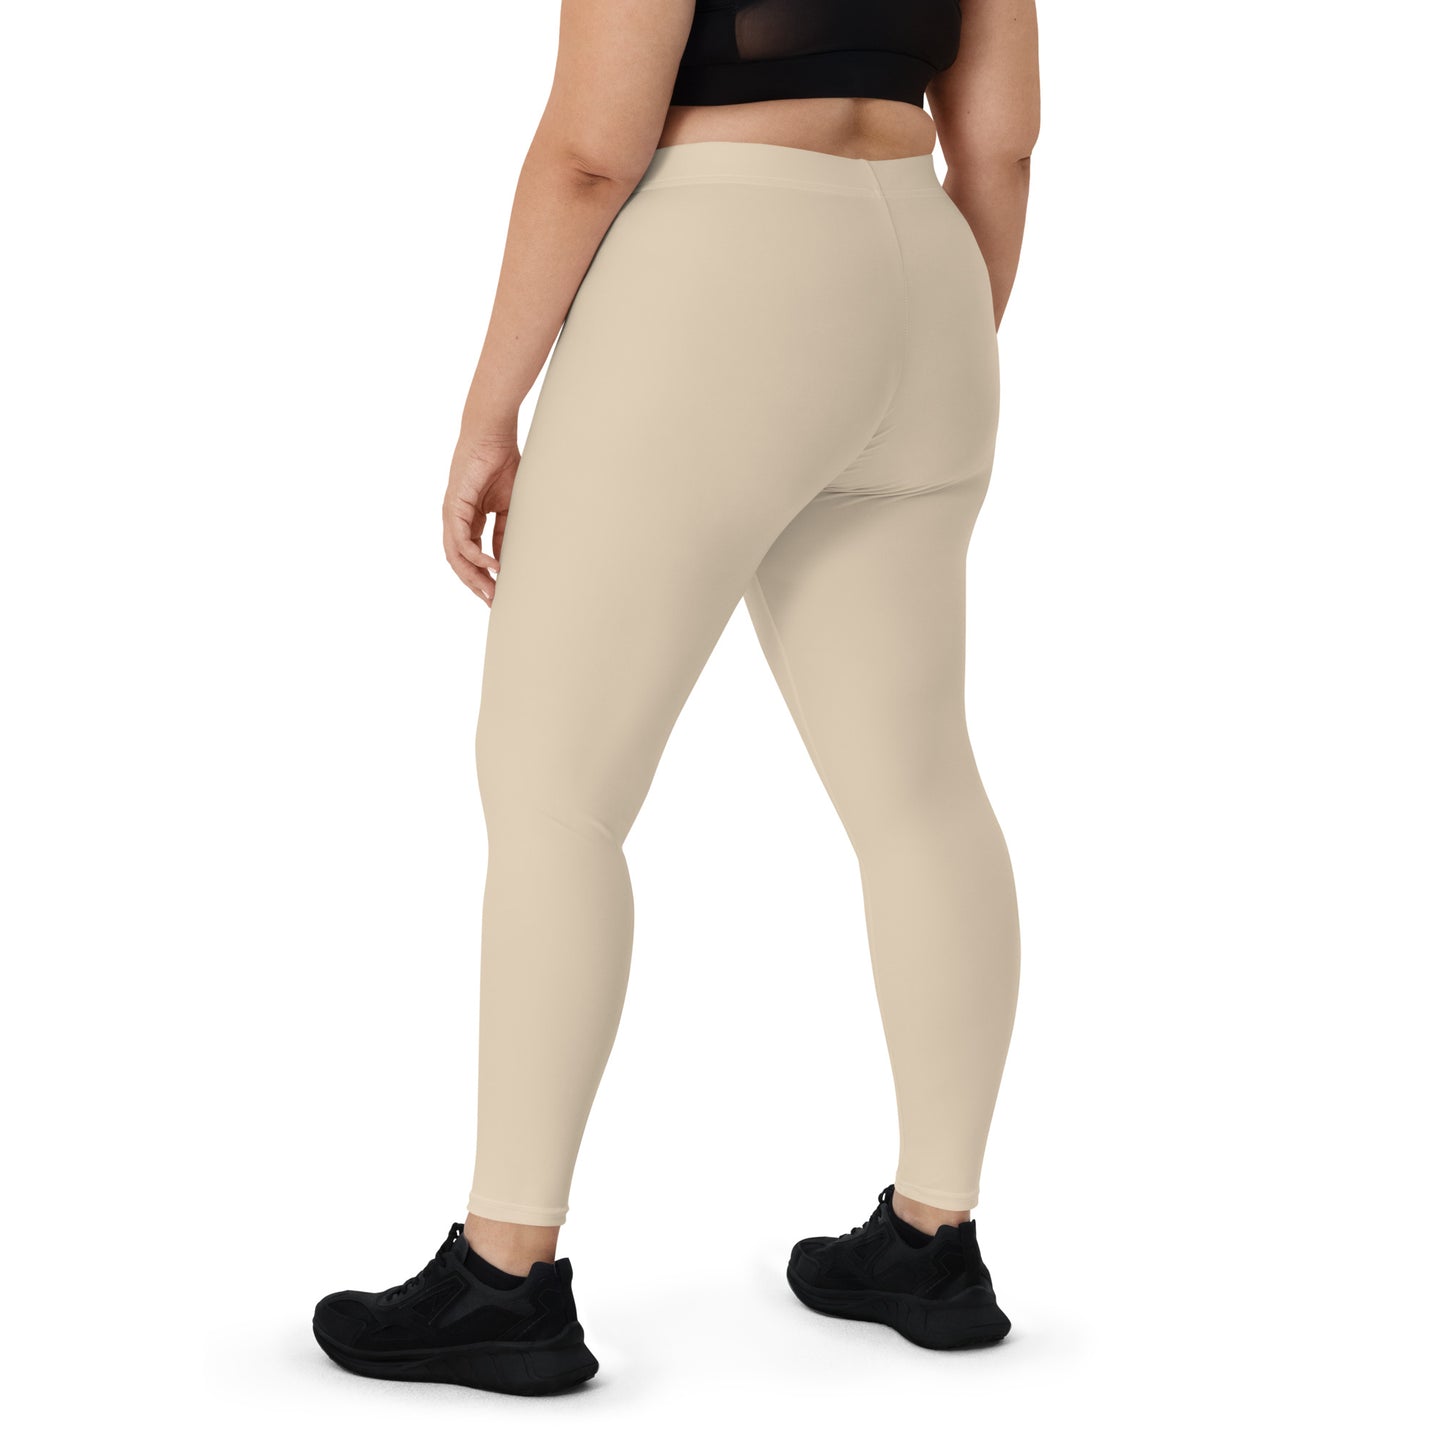 Humble Sportswear, women’s color match leggings, women’s activewear bottoms, spandex leggings, stretchy leggings, long leggings